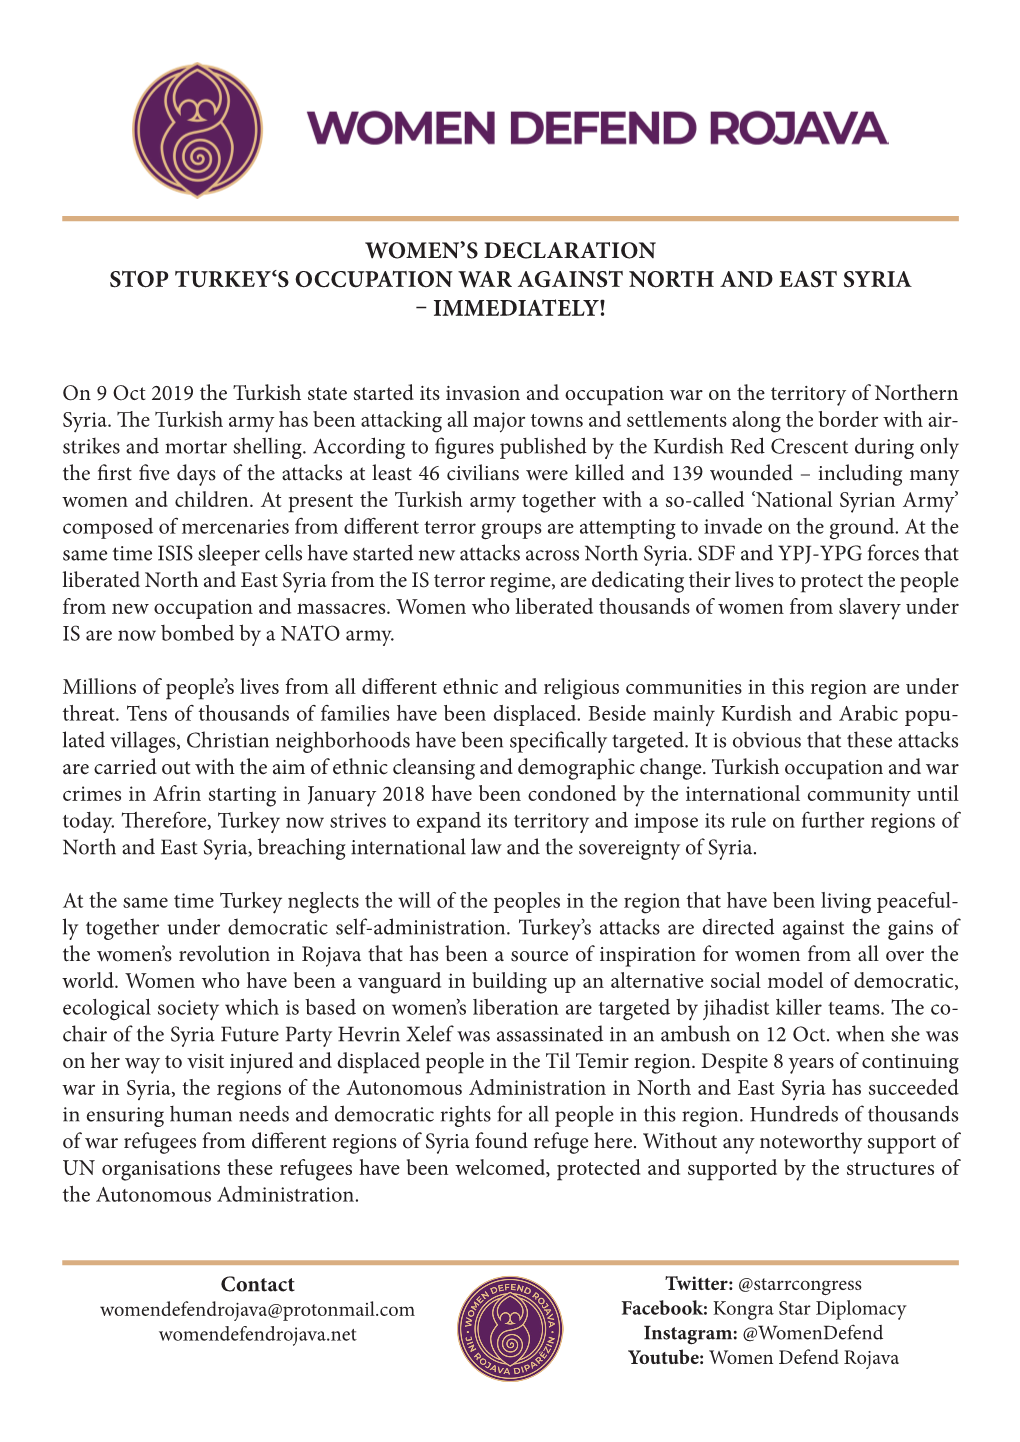 Women's Declaration Stop Turkey's Occupation War Against North And